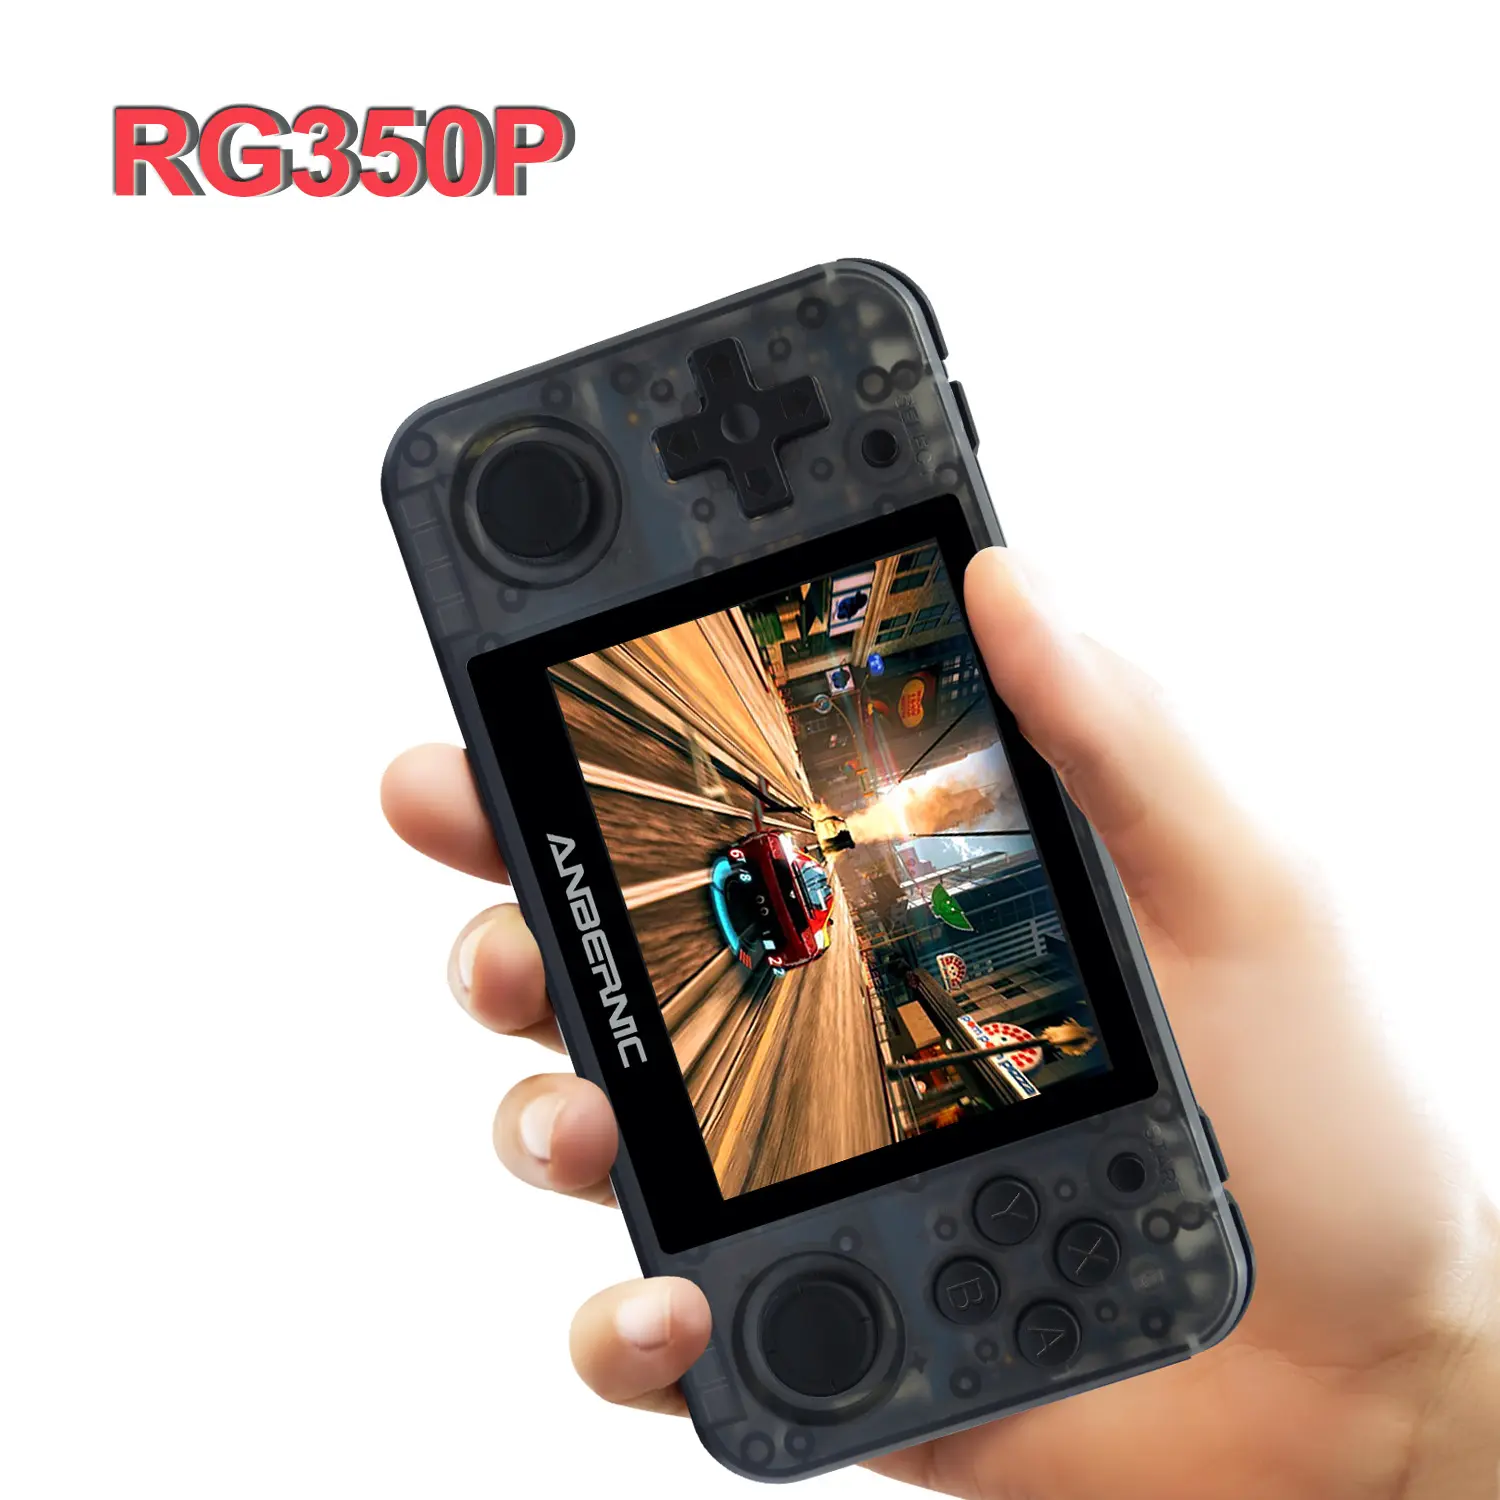 ANBERNIC-consola de videojuegos portátil RG350P, pantalla IPS de 3,5 ", color negro, descarga gratuita de juegos